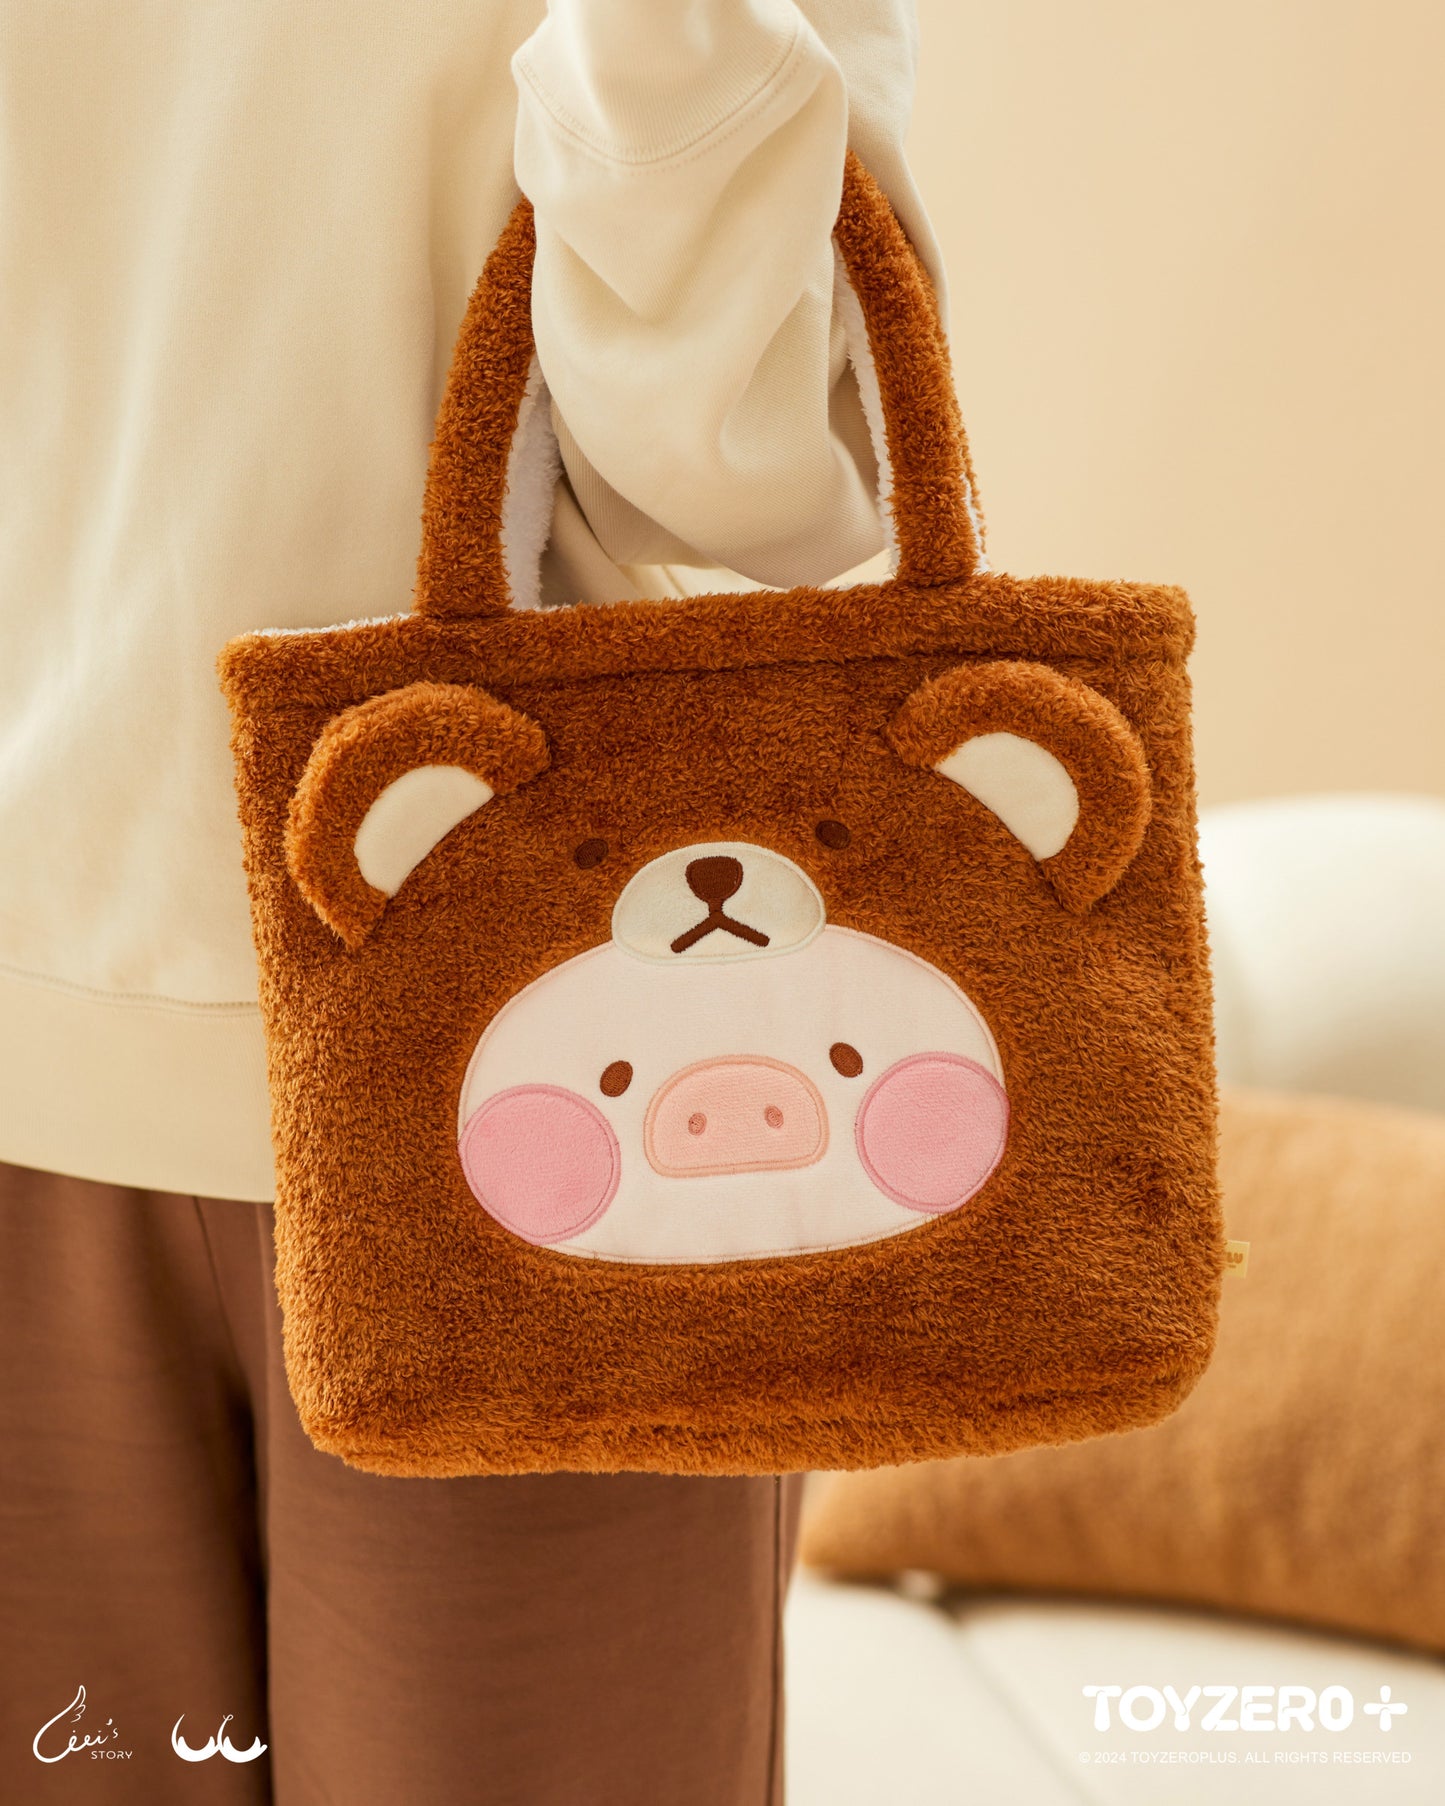 LuLu the Piggy Costume Series - Fluffy Reversable Bag 罐頭豬LuLu 變裝系列 - 雙面LuLu毛絨包包